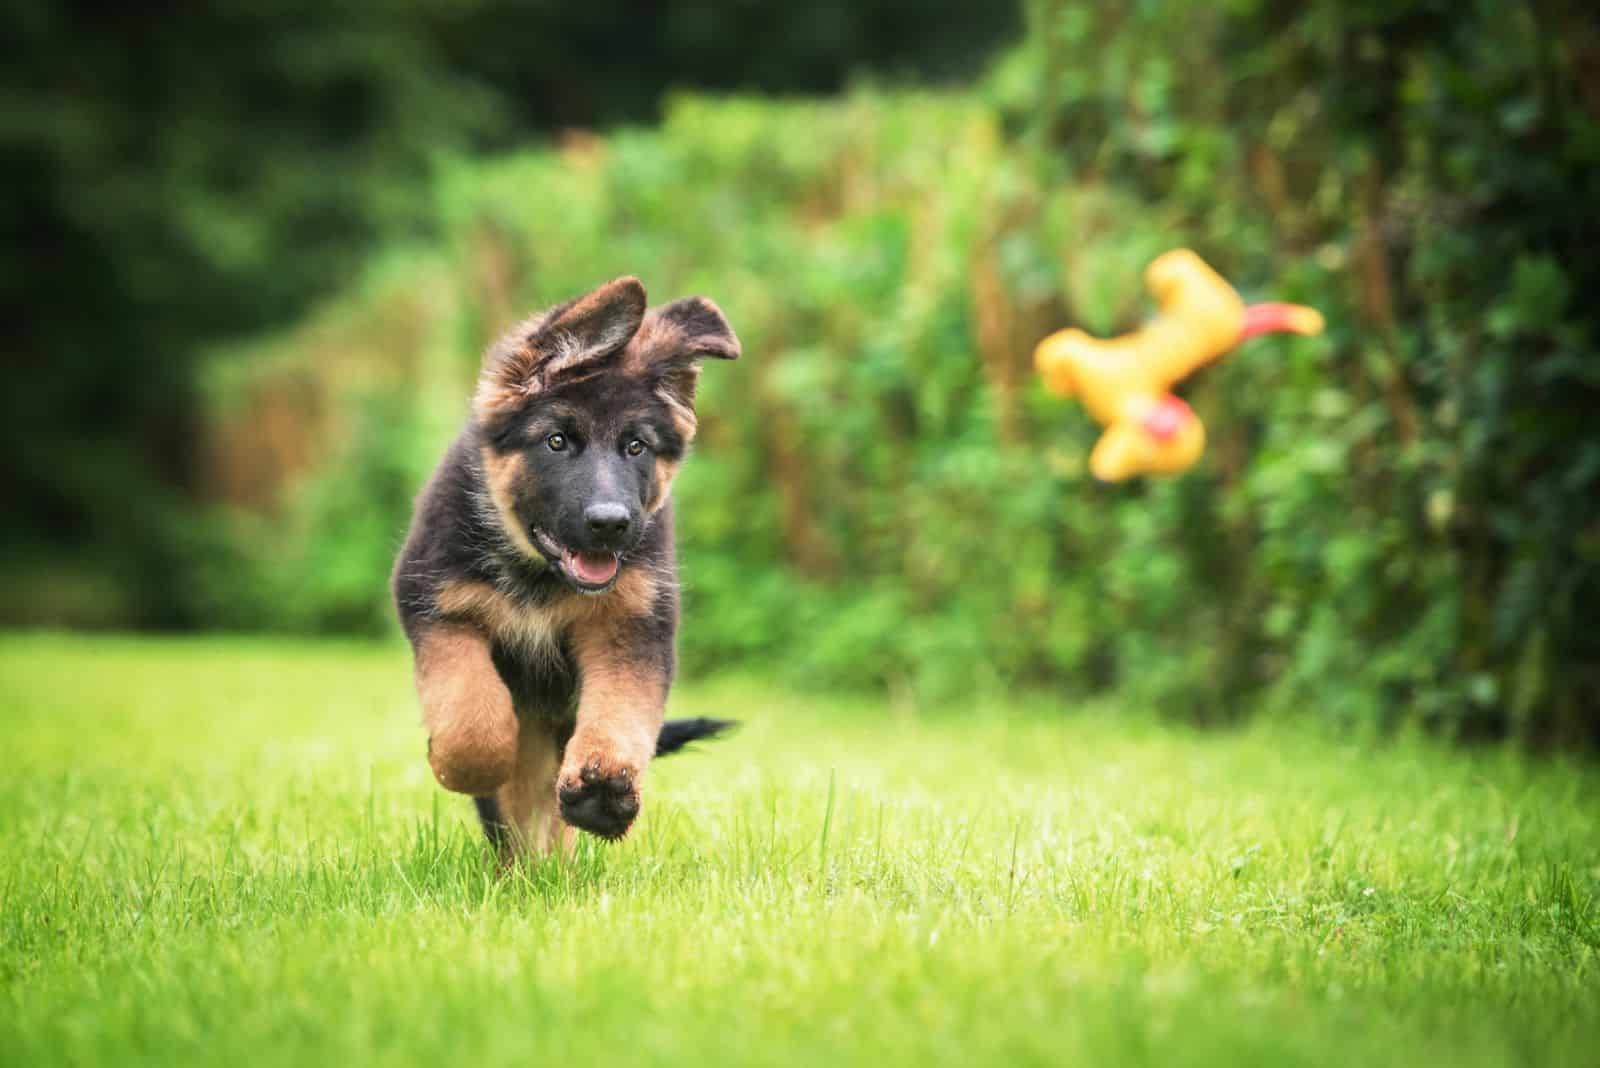 German Shepherd Puppi runs across the field after a toy